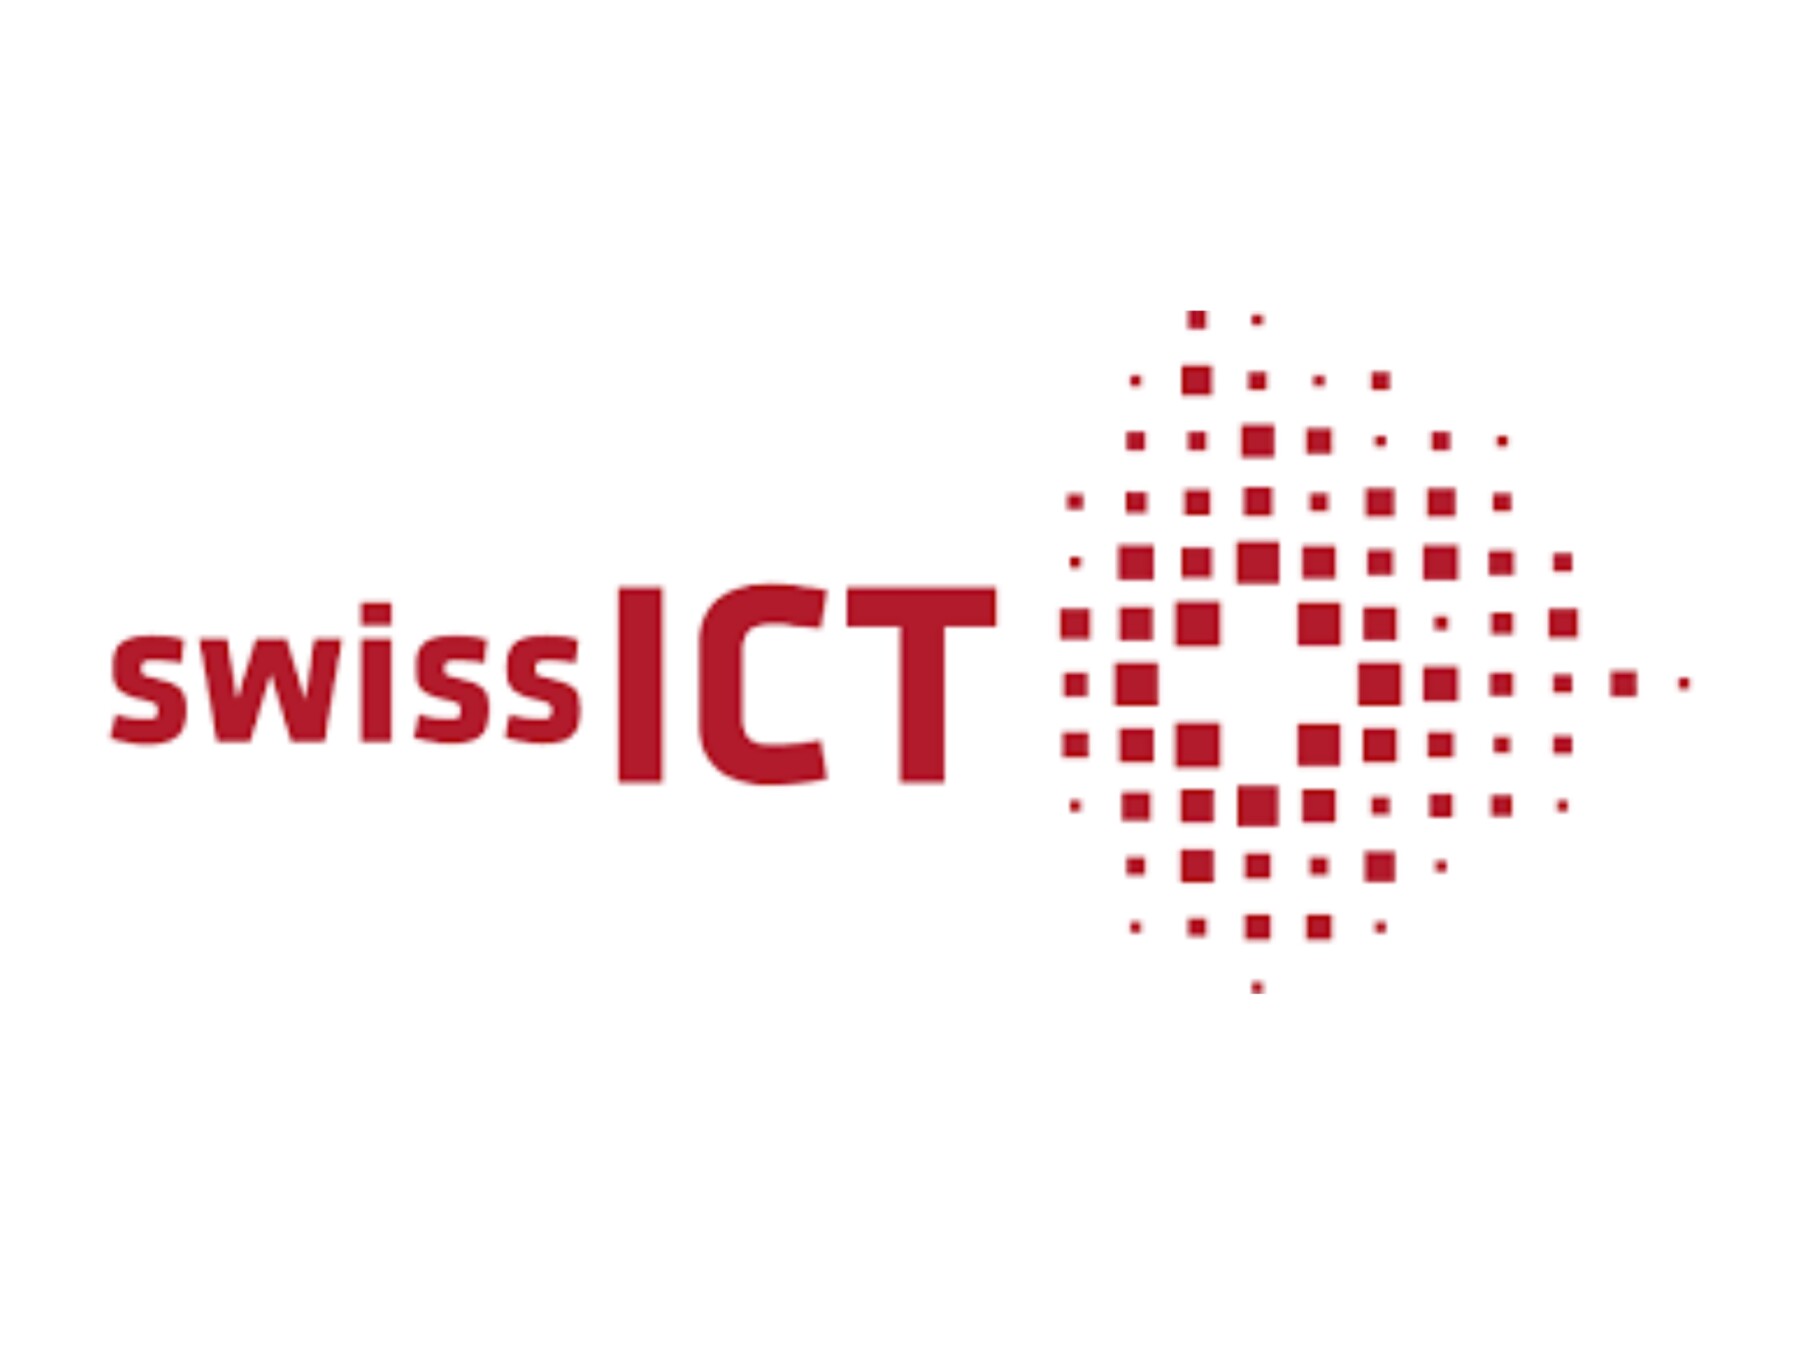 Swiss ICT Digital World